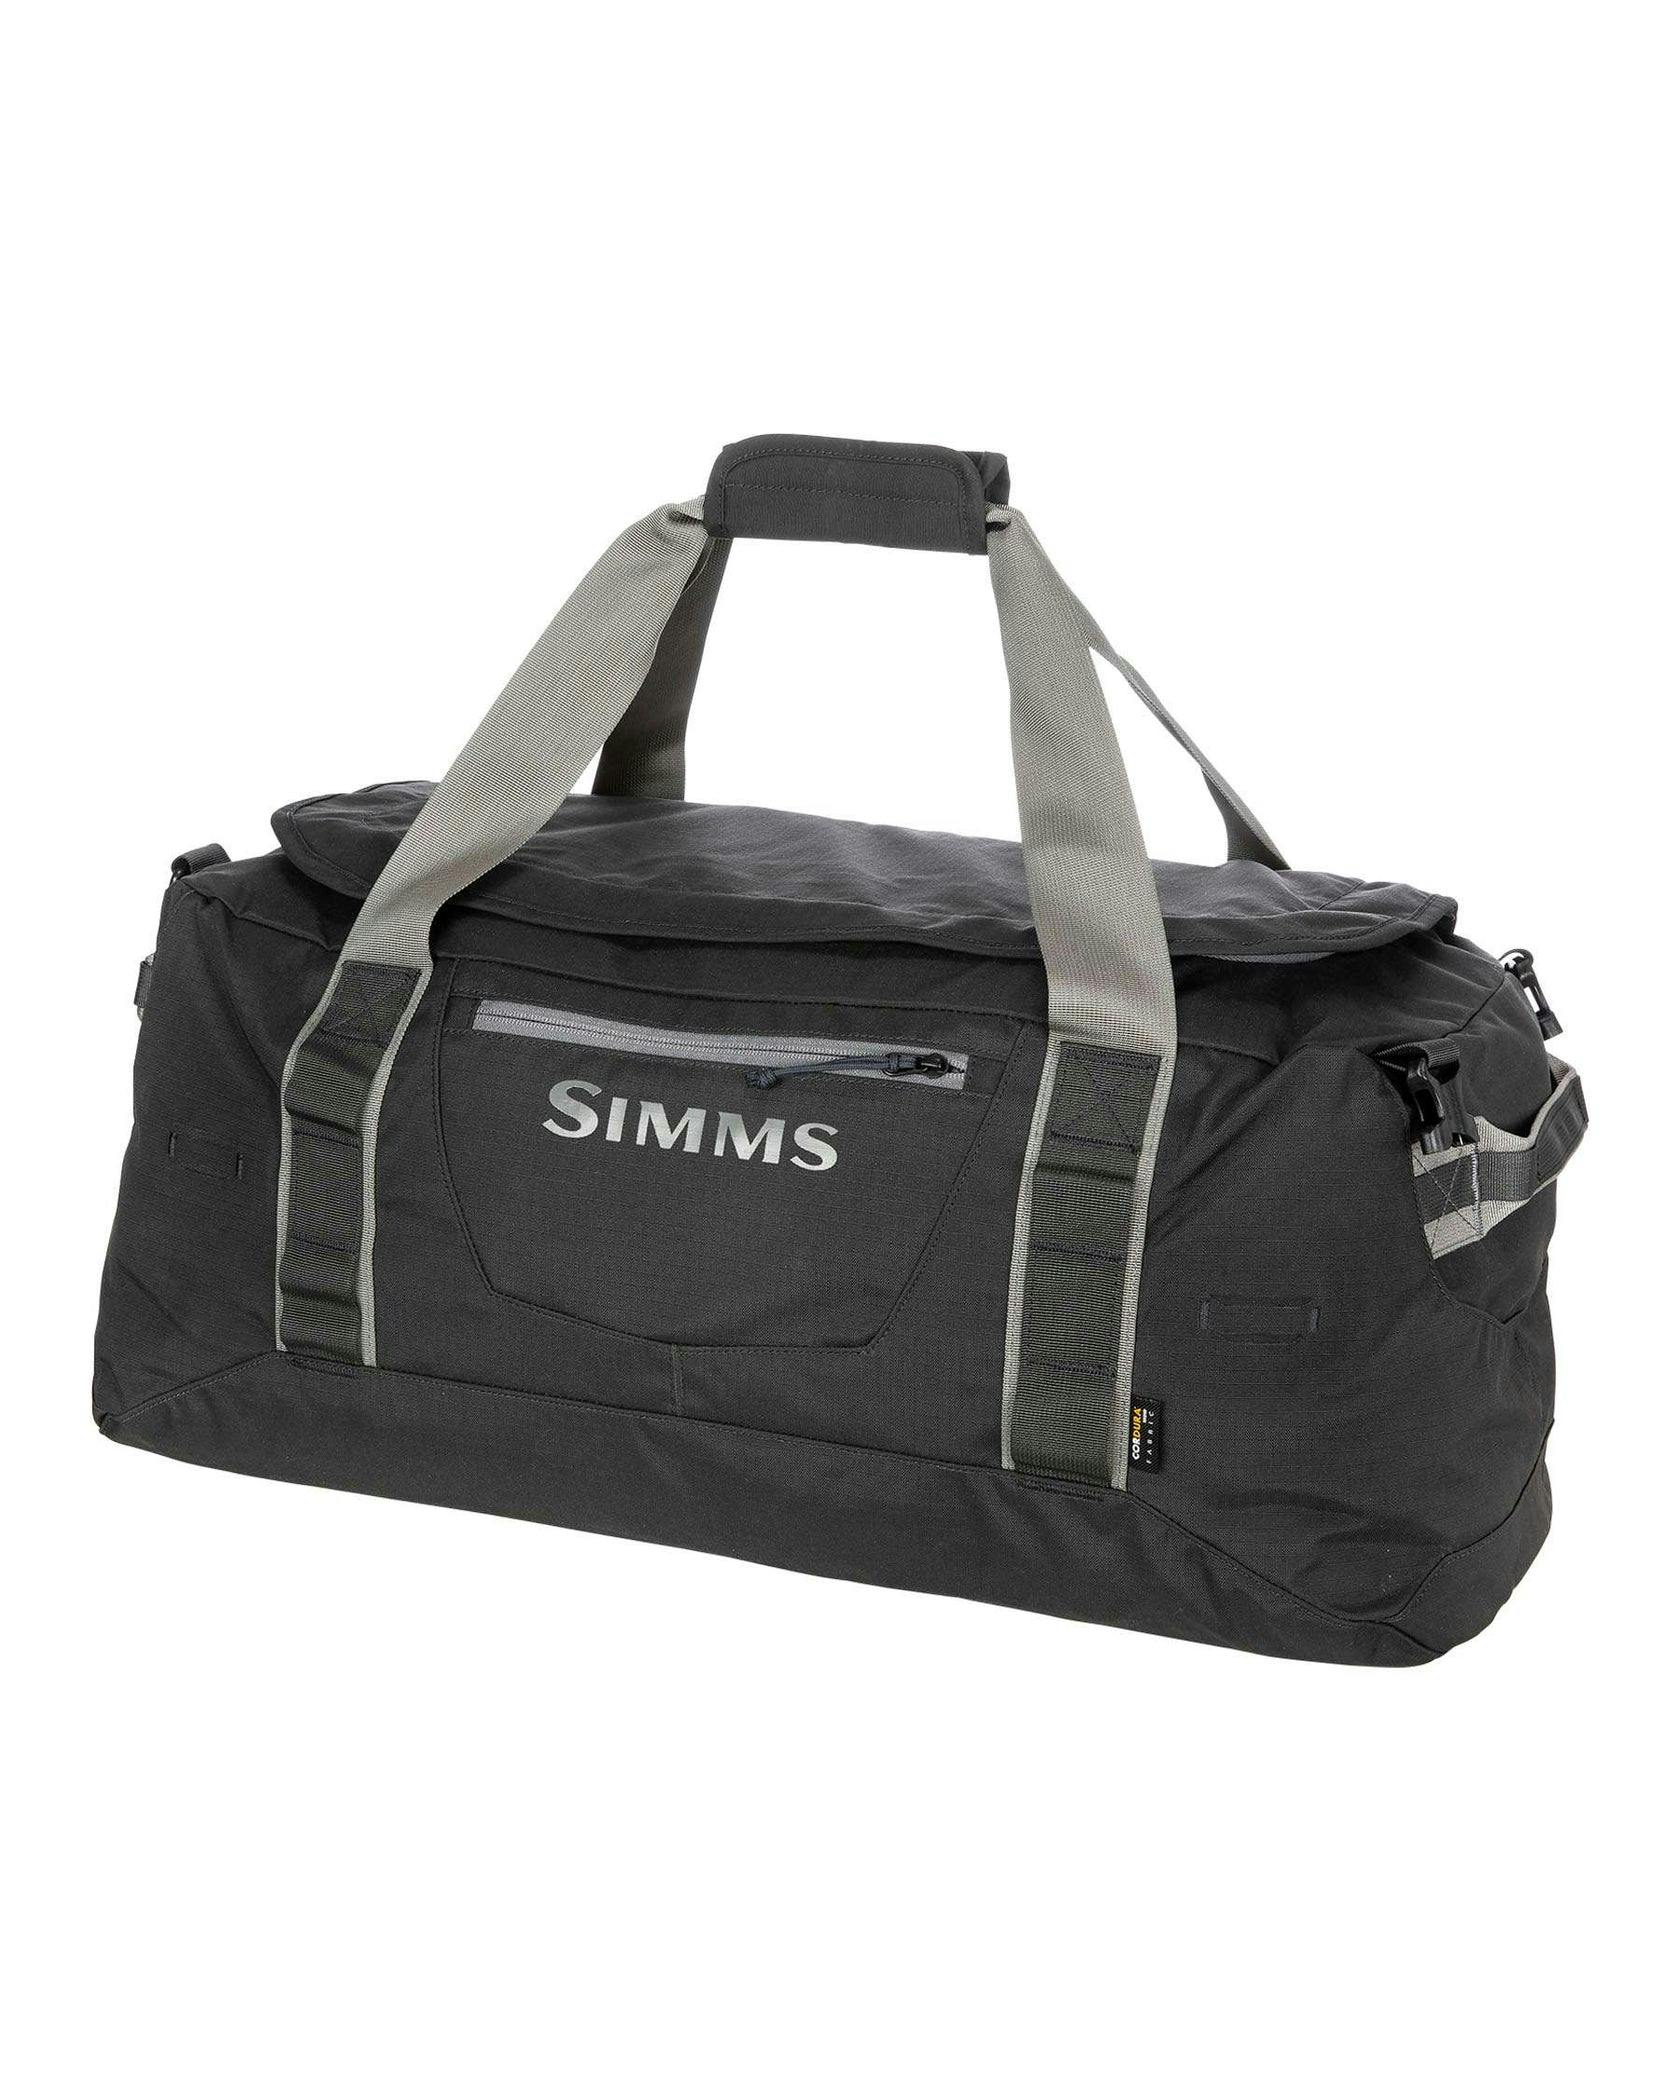 Simms GTS Gear Duffel Bag